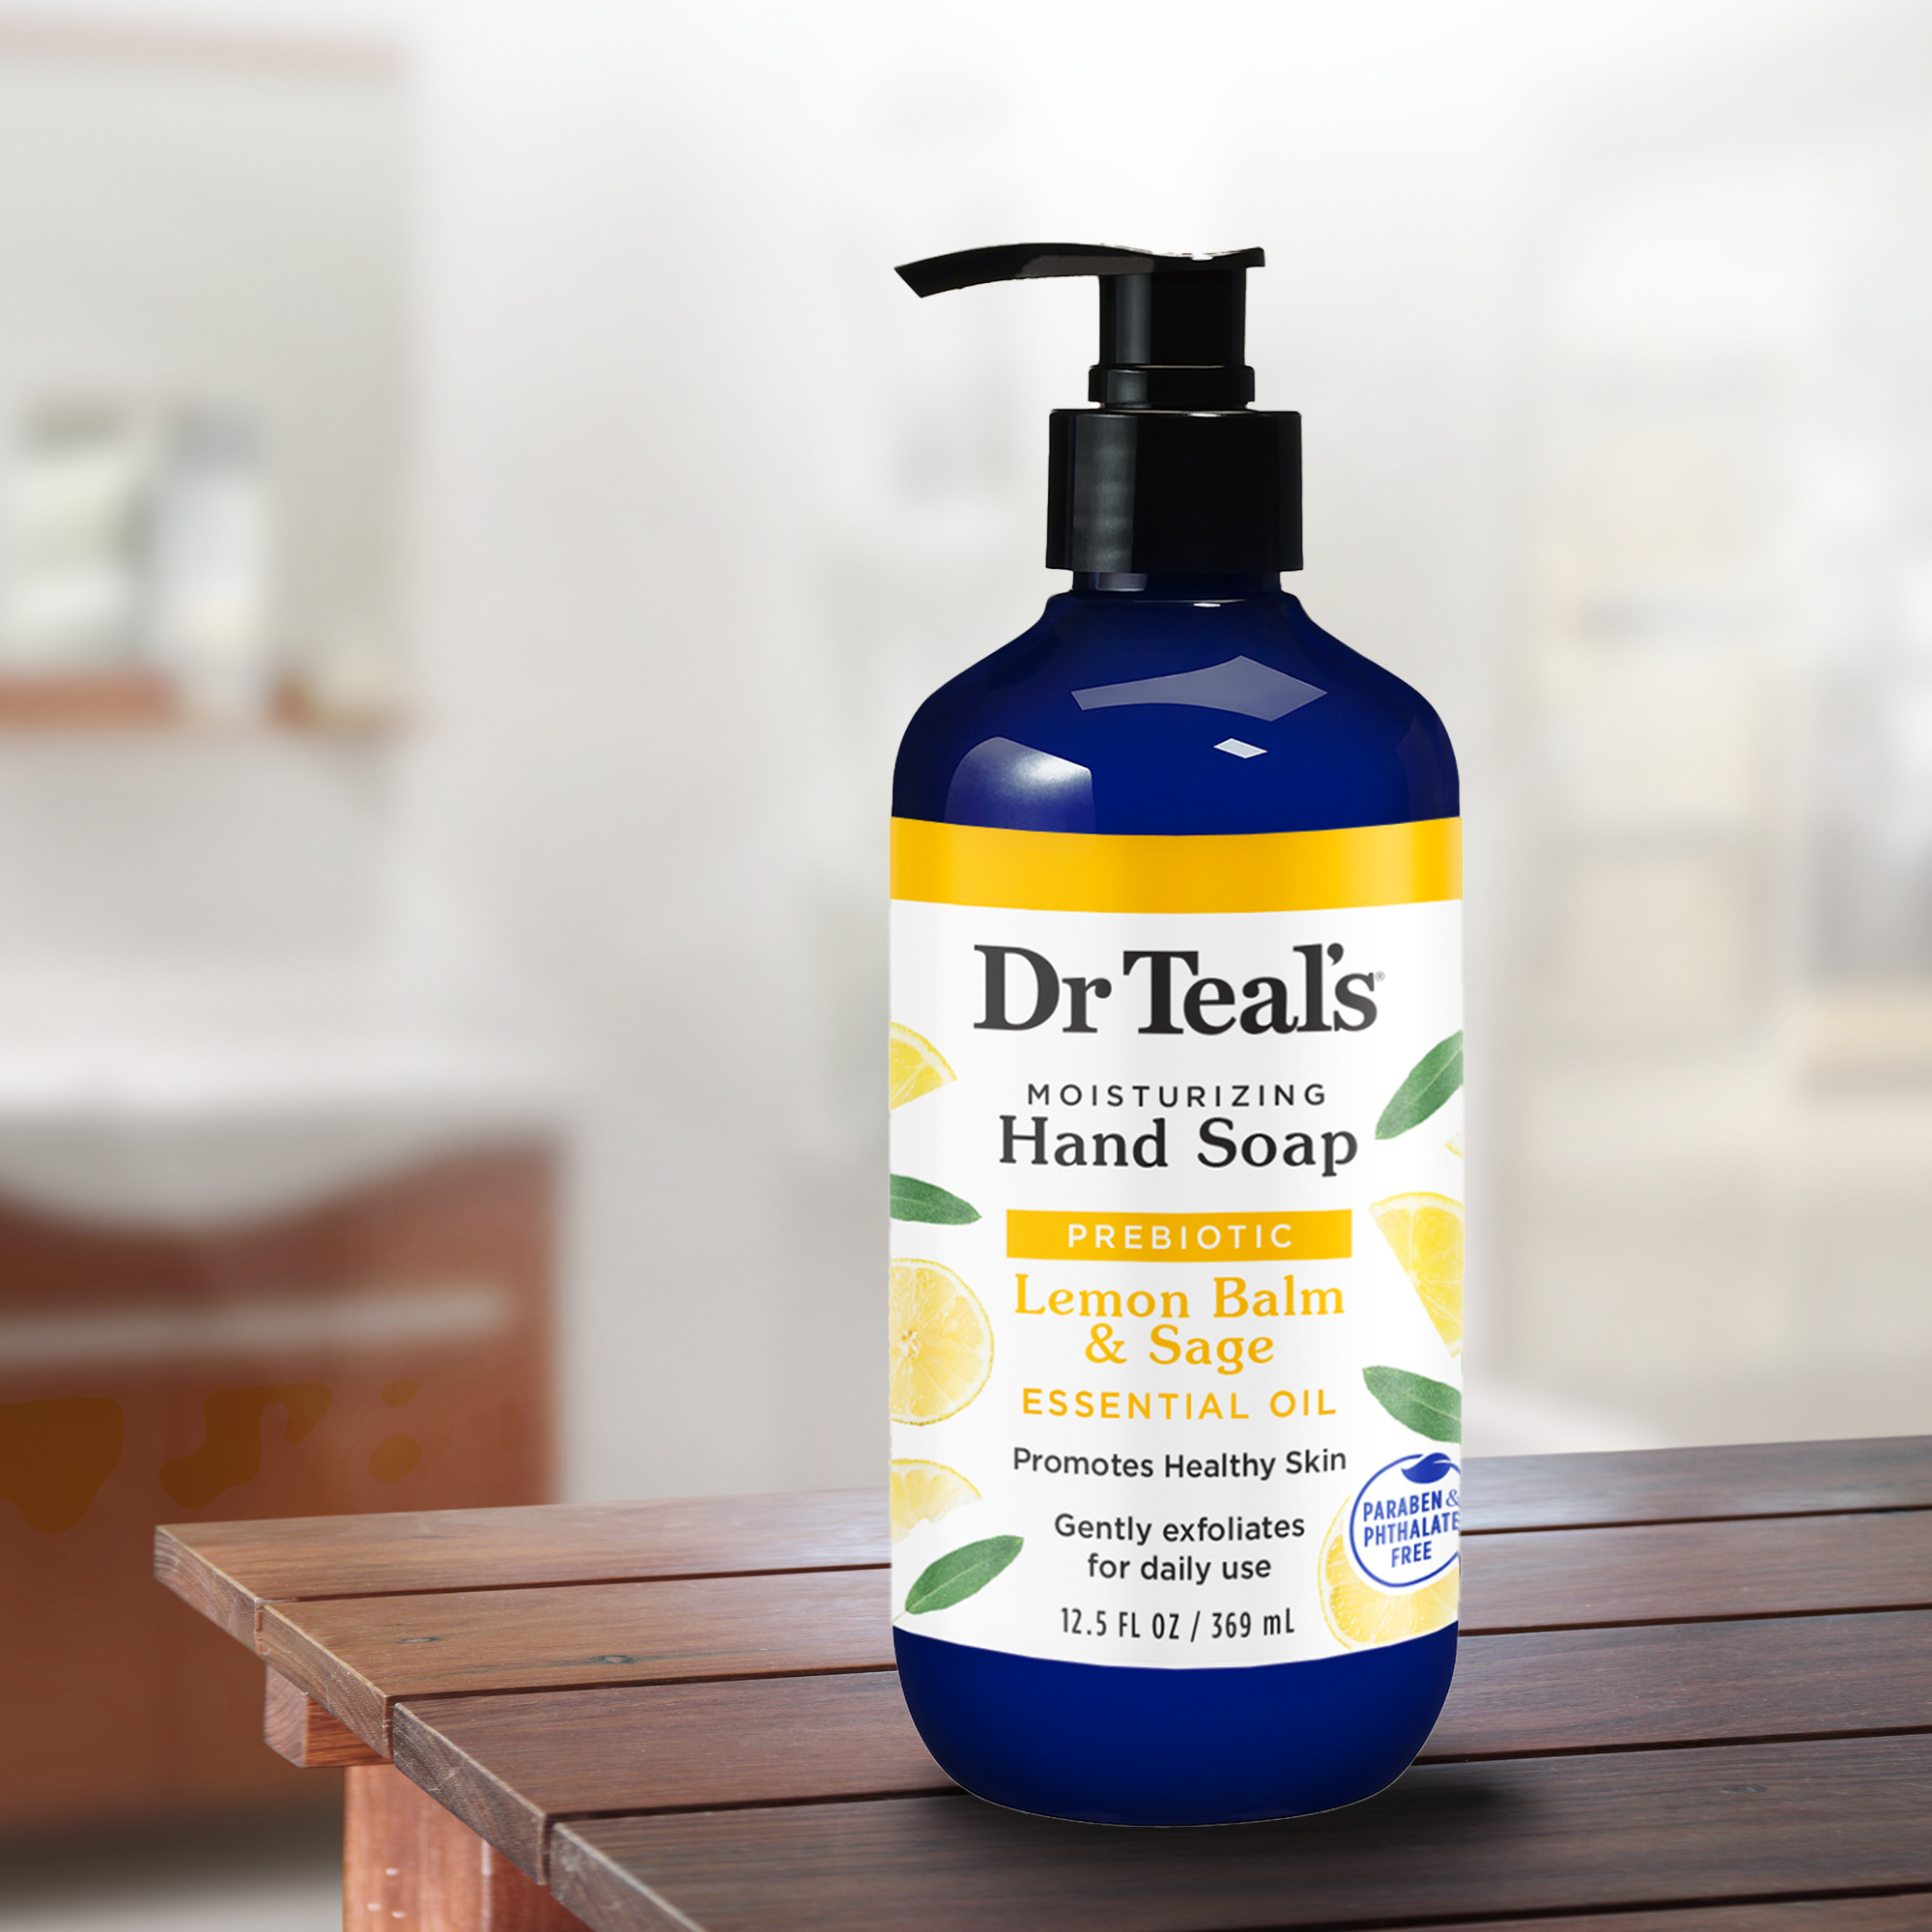 Dr Teal's Moisturizing Hand Soap, Prebiotic with Lemon Balm & Sage Essential Oil, 12.5 fl oz - image 6 of 7